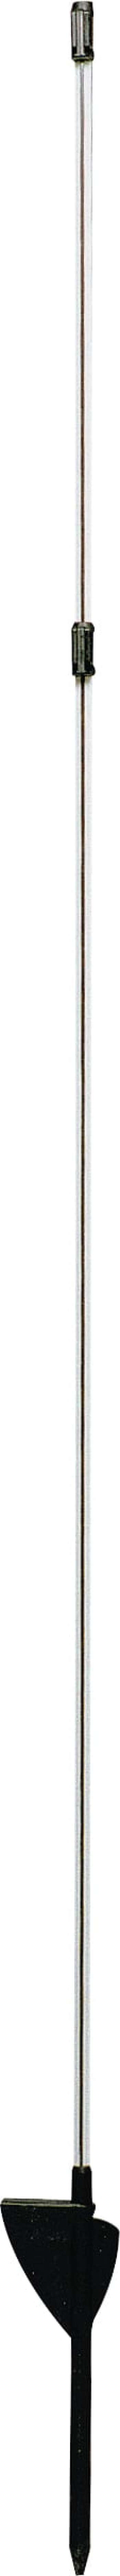 Glasfiberstolpe DeLaval Oval 150cm